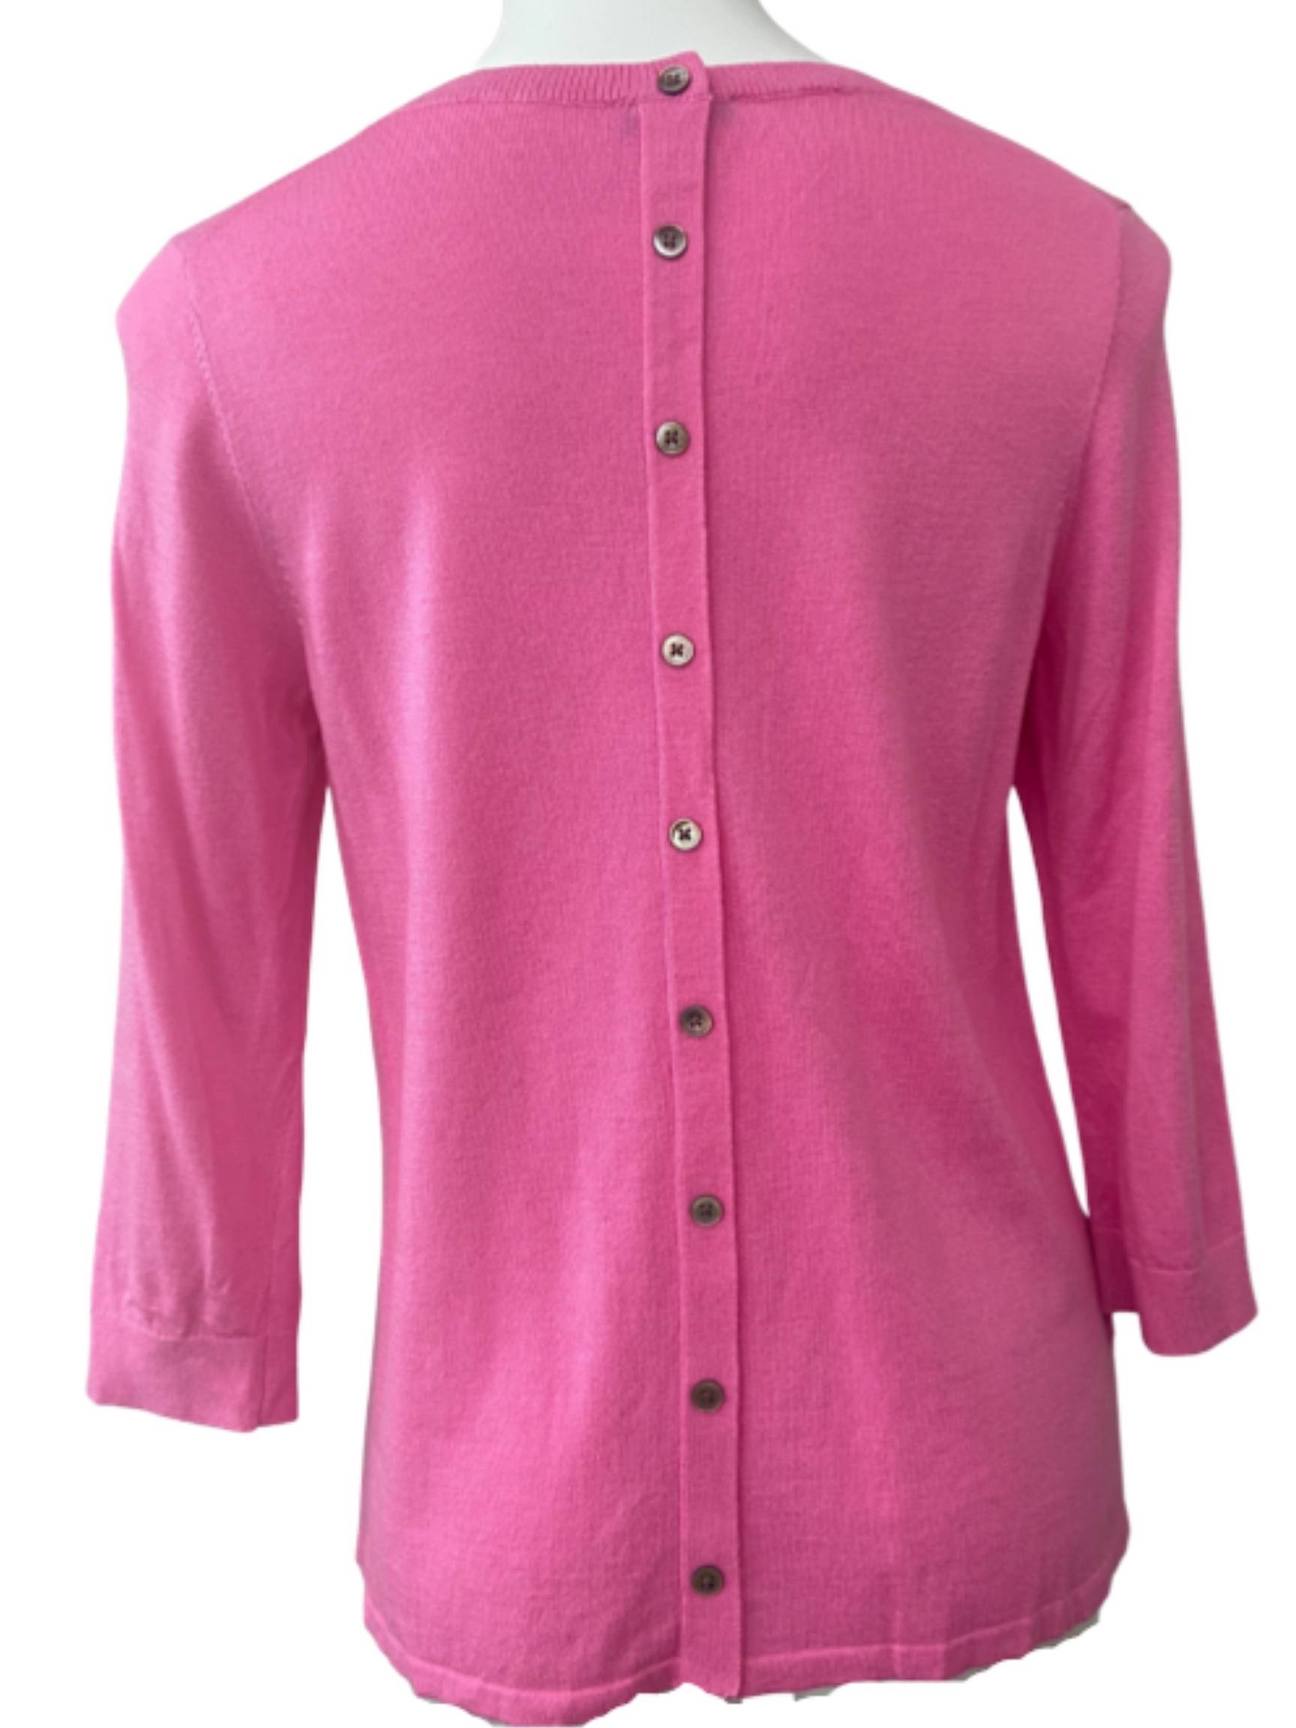 Cool Summer ANN TAYLOR pink button-back sweater